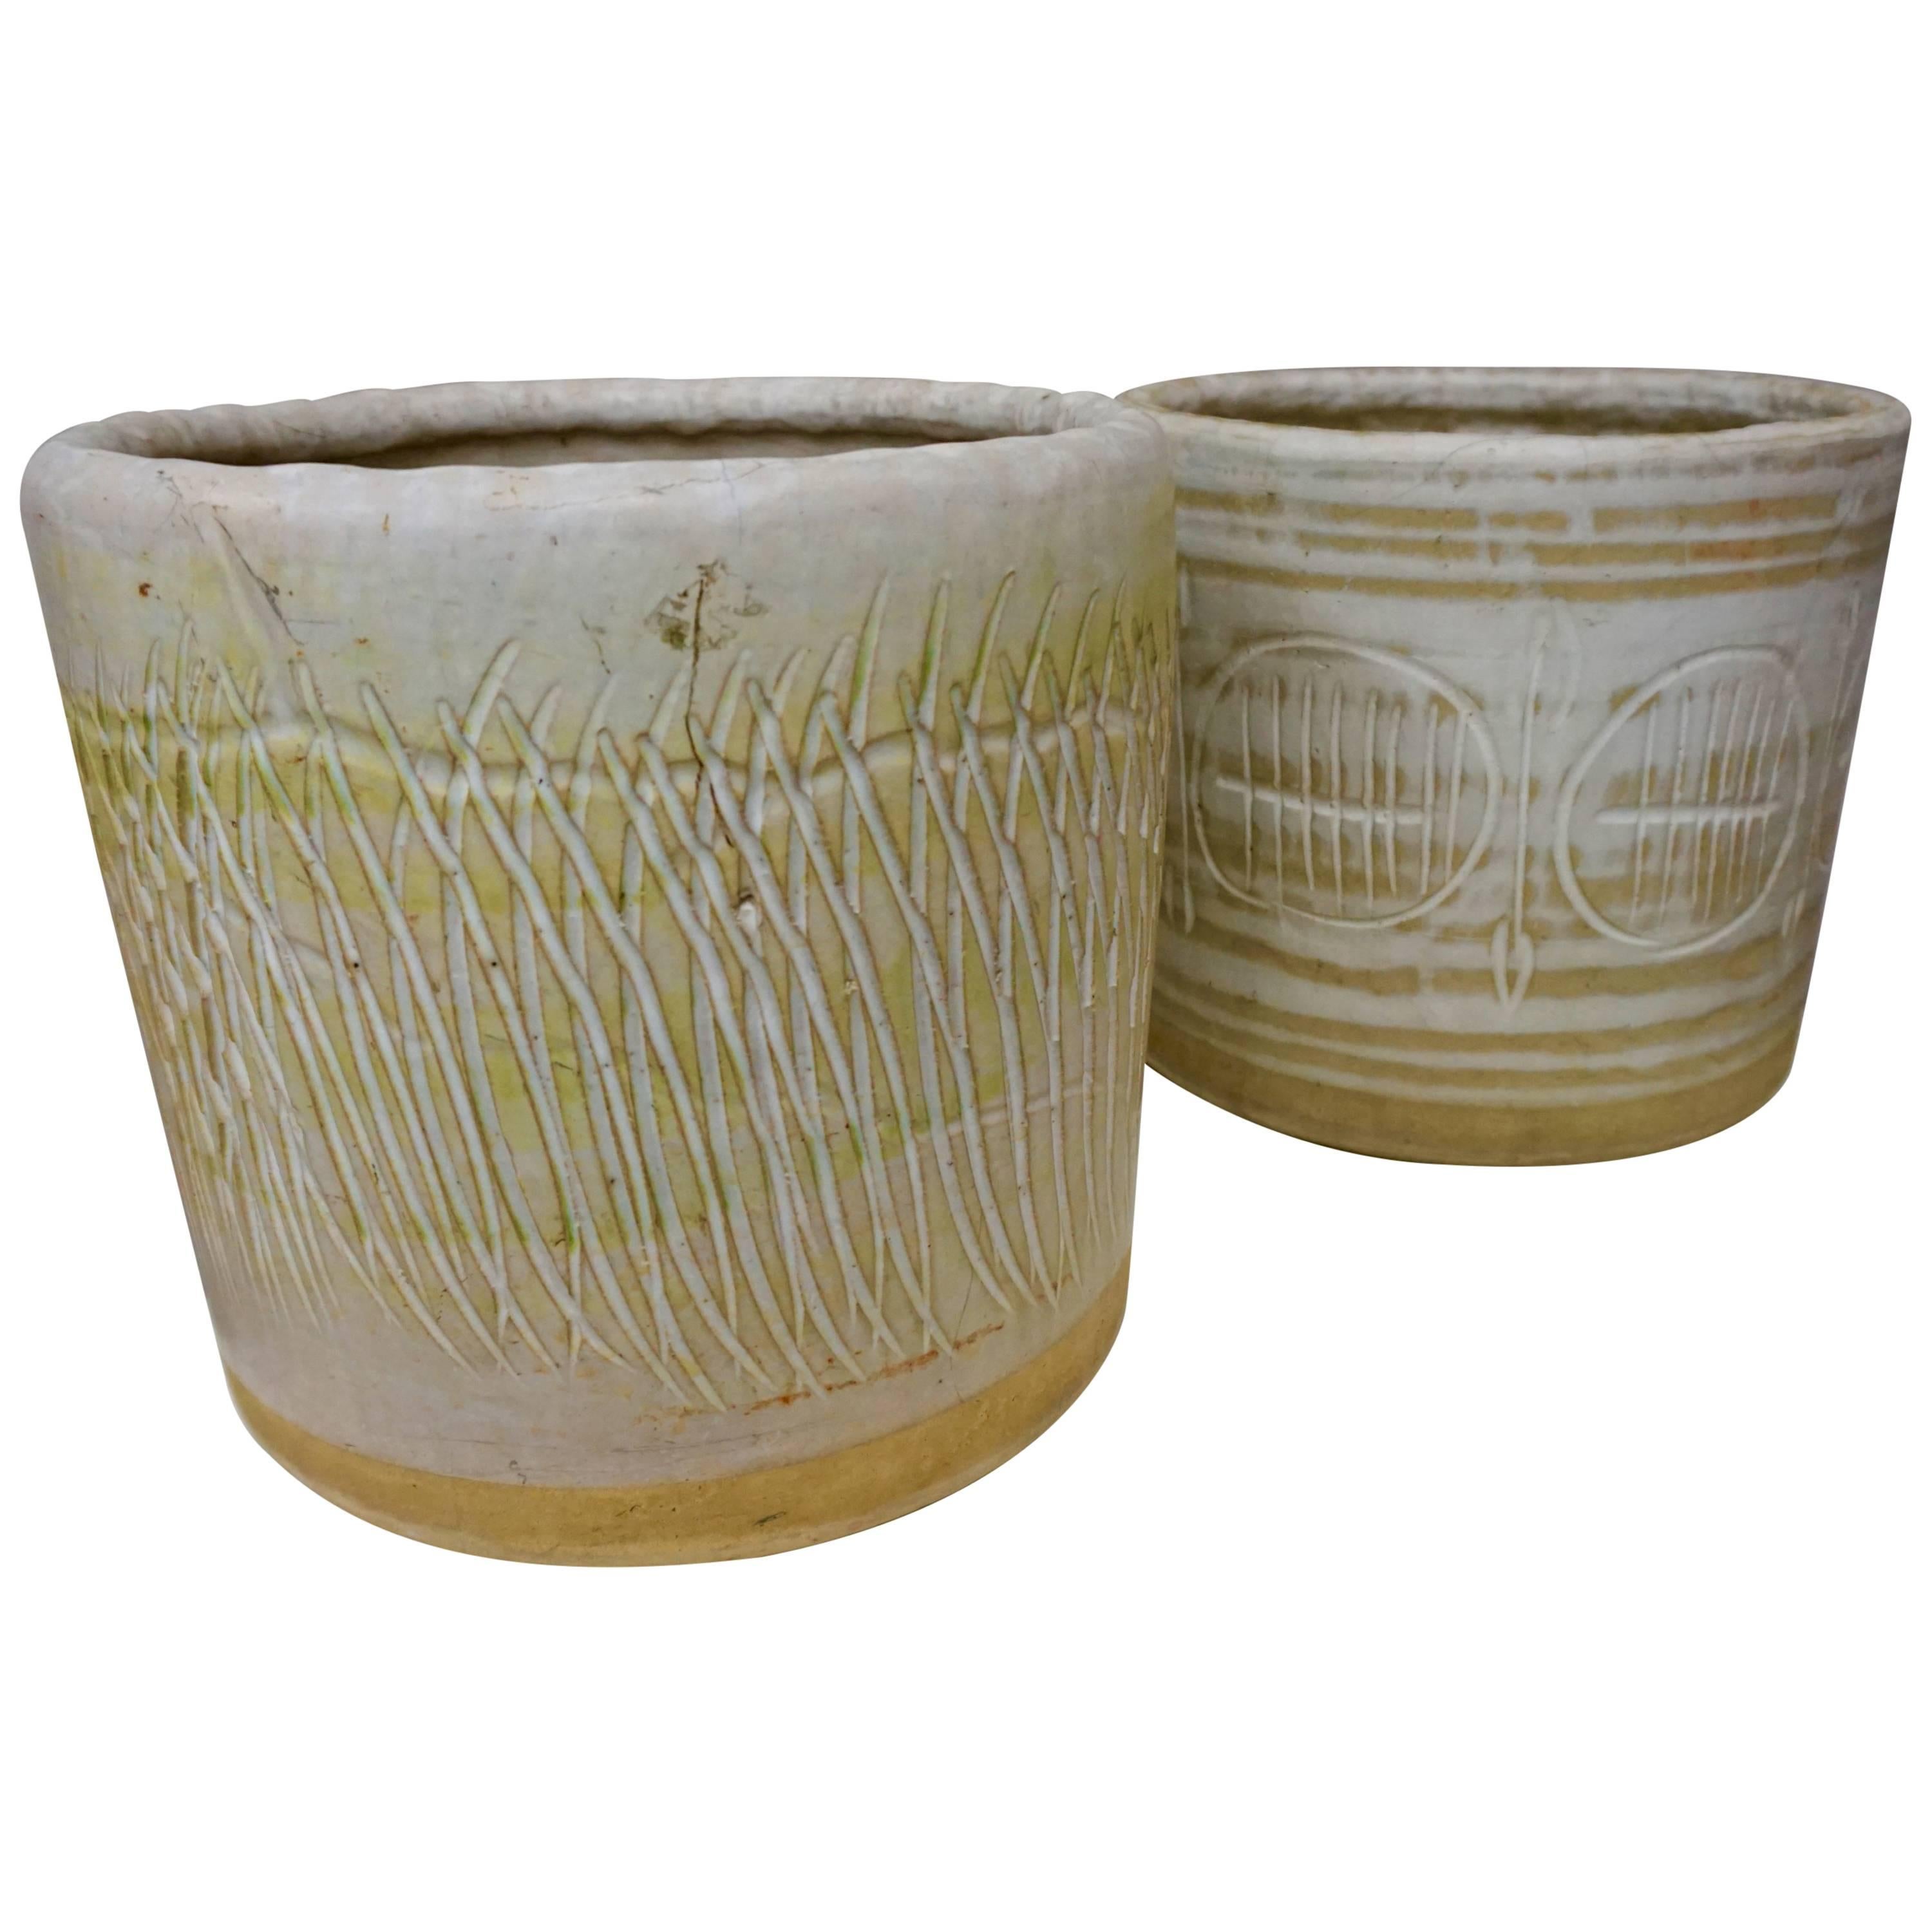 Pair of Ceramic Vessels by Martz Studios